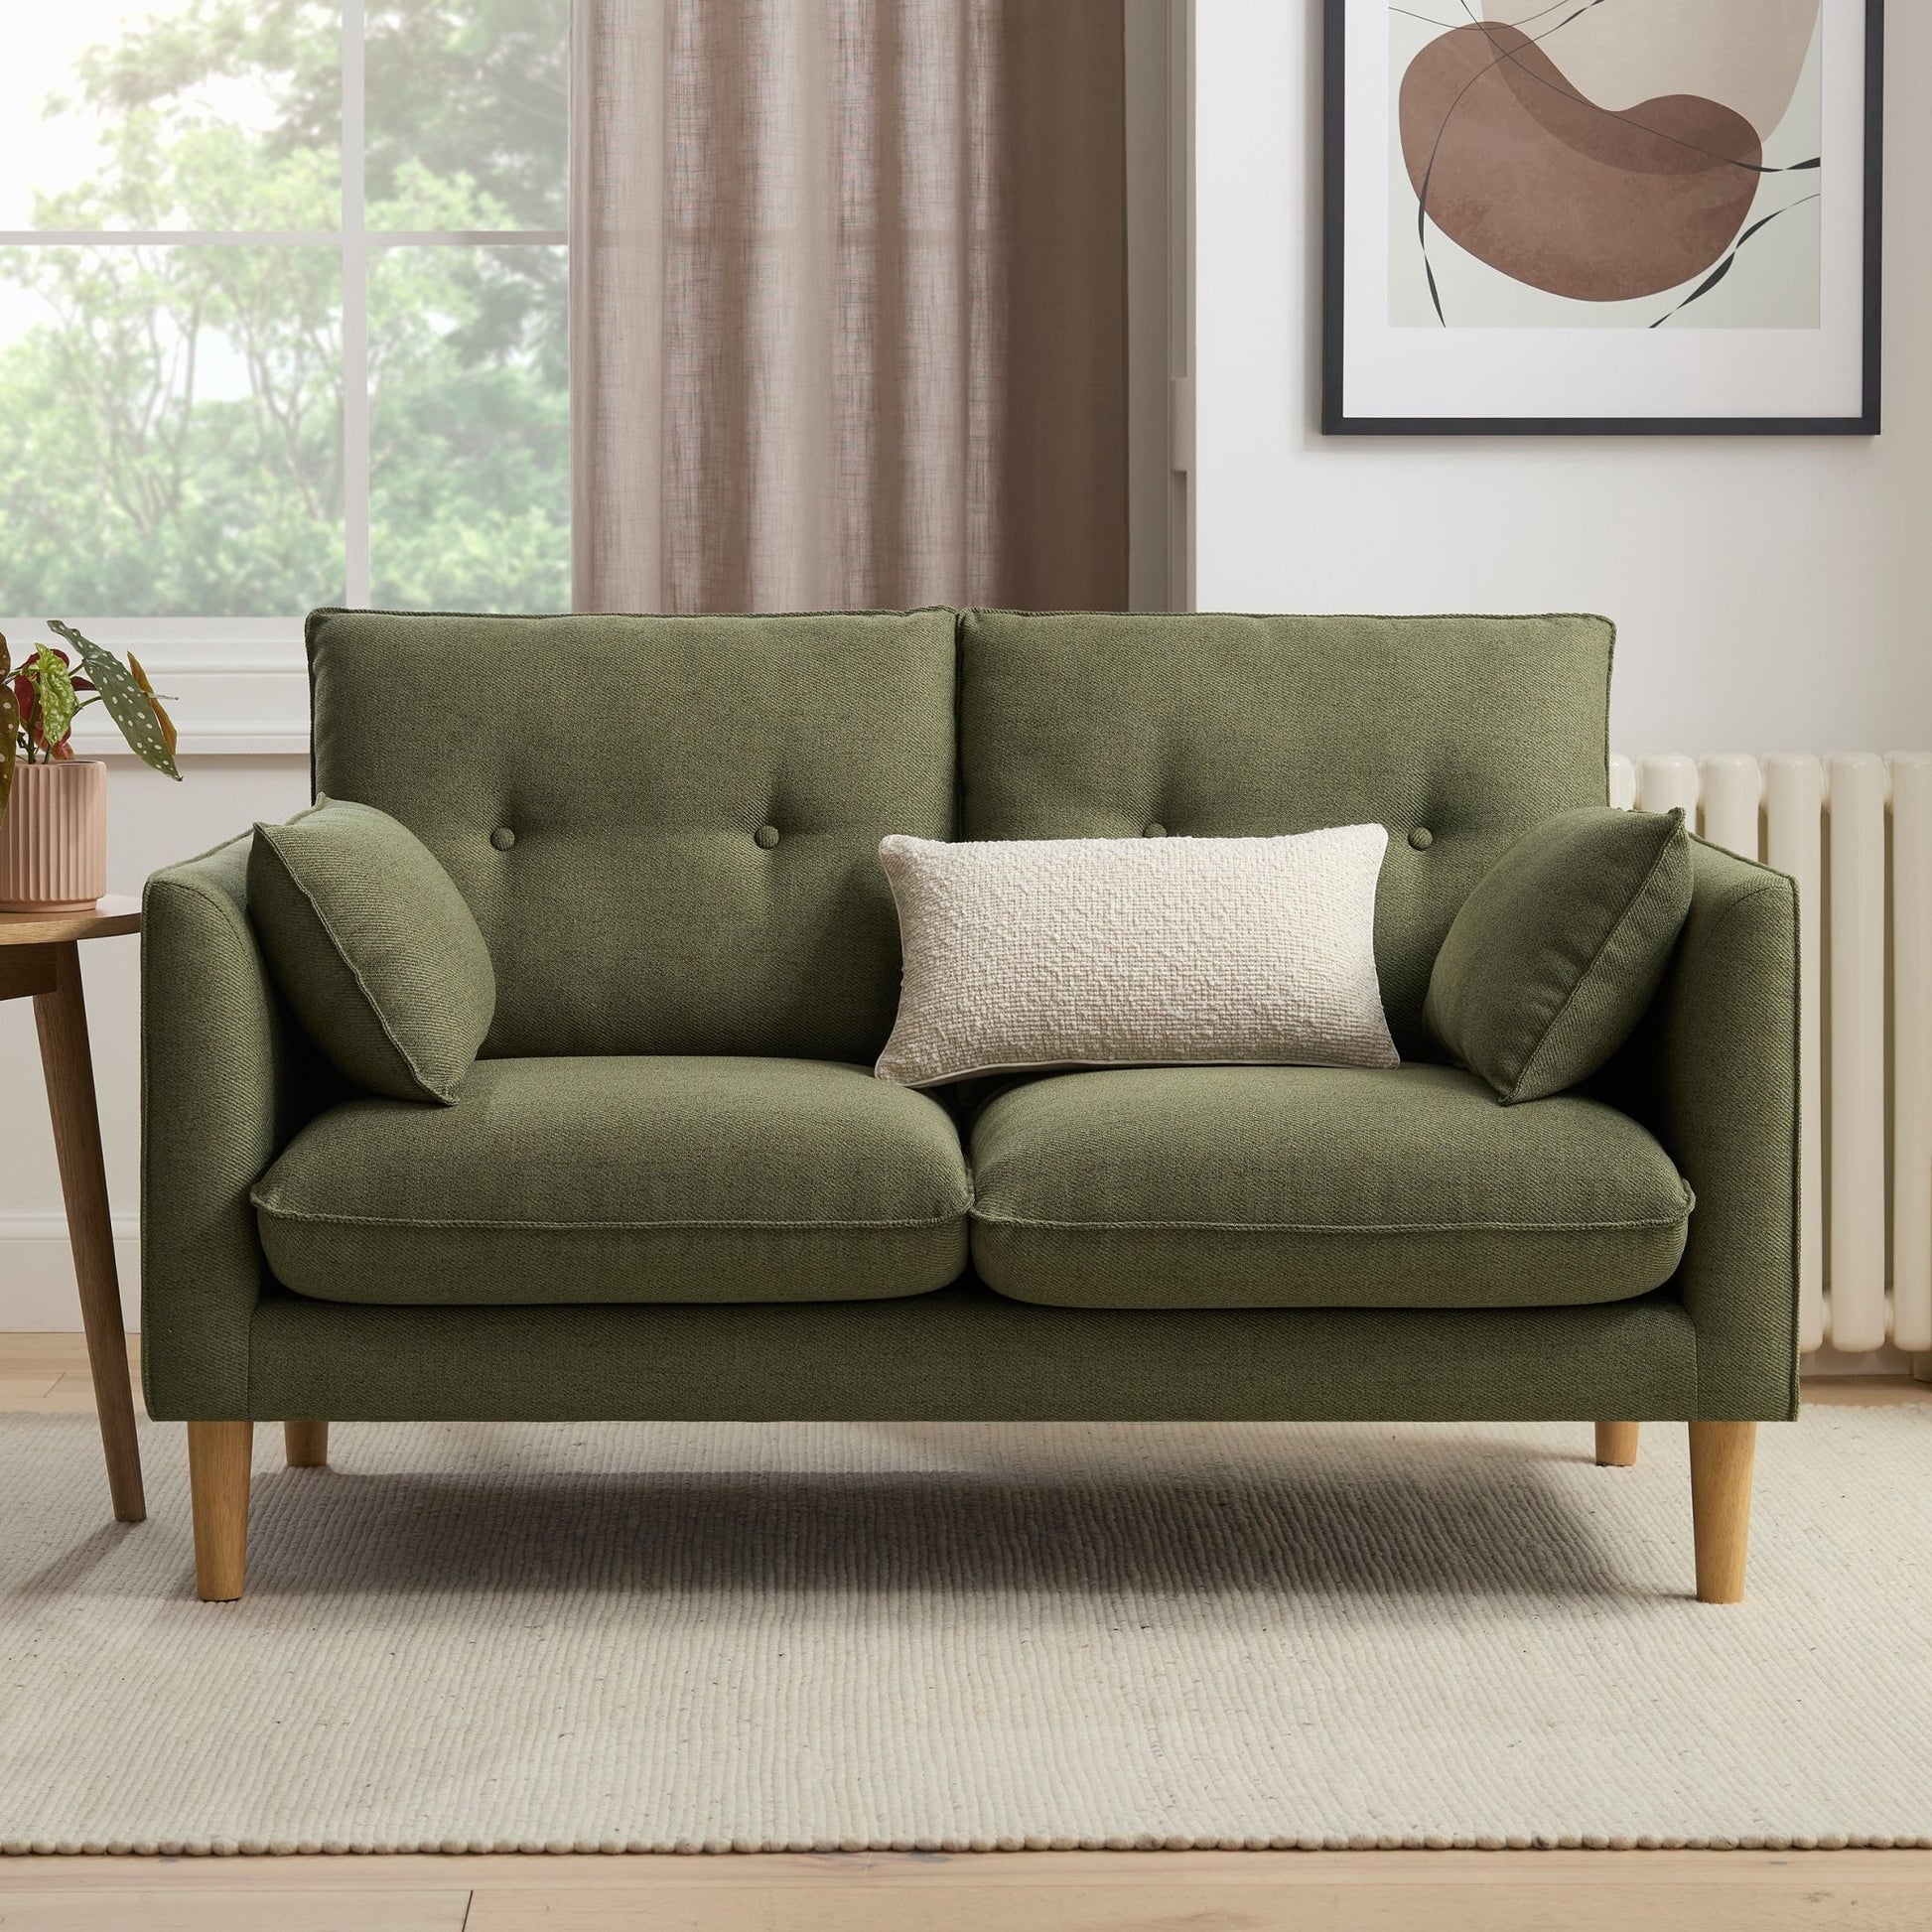 Shoreditch 2 Seater Sofa - Woven Green - DUSK